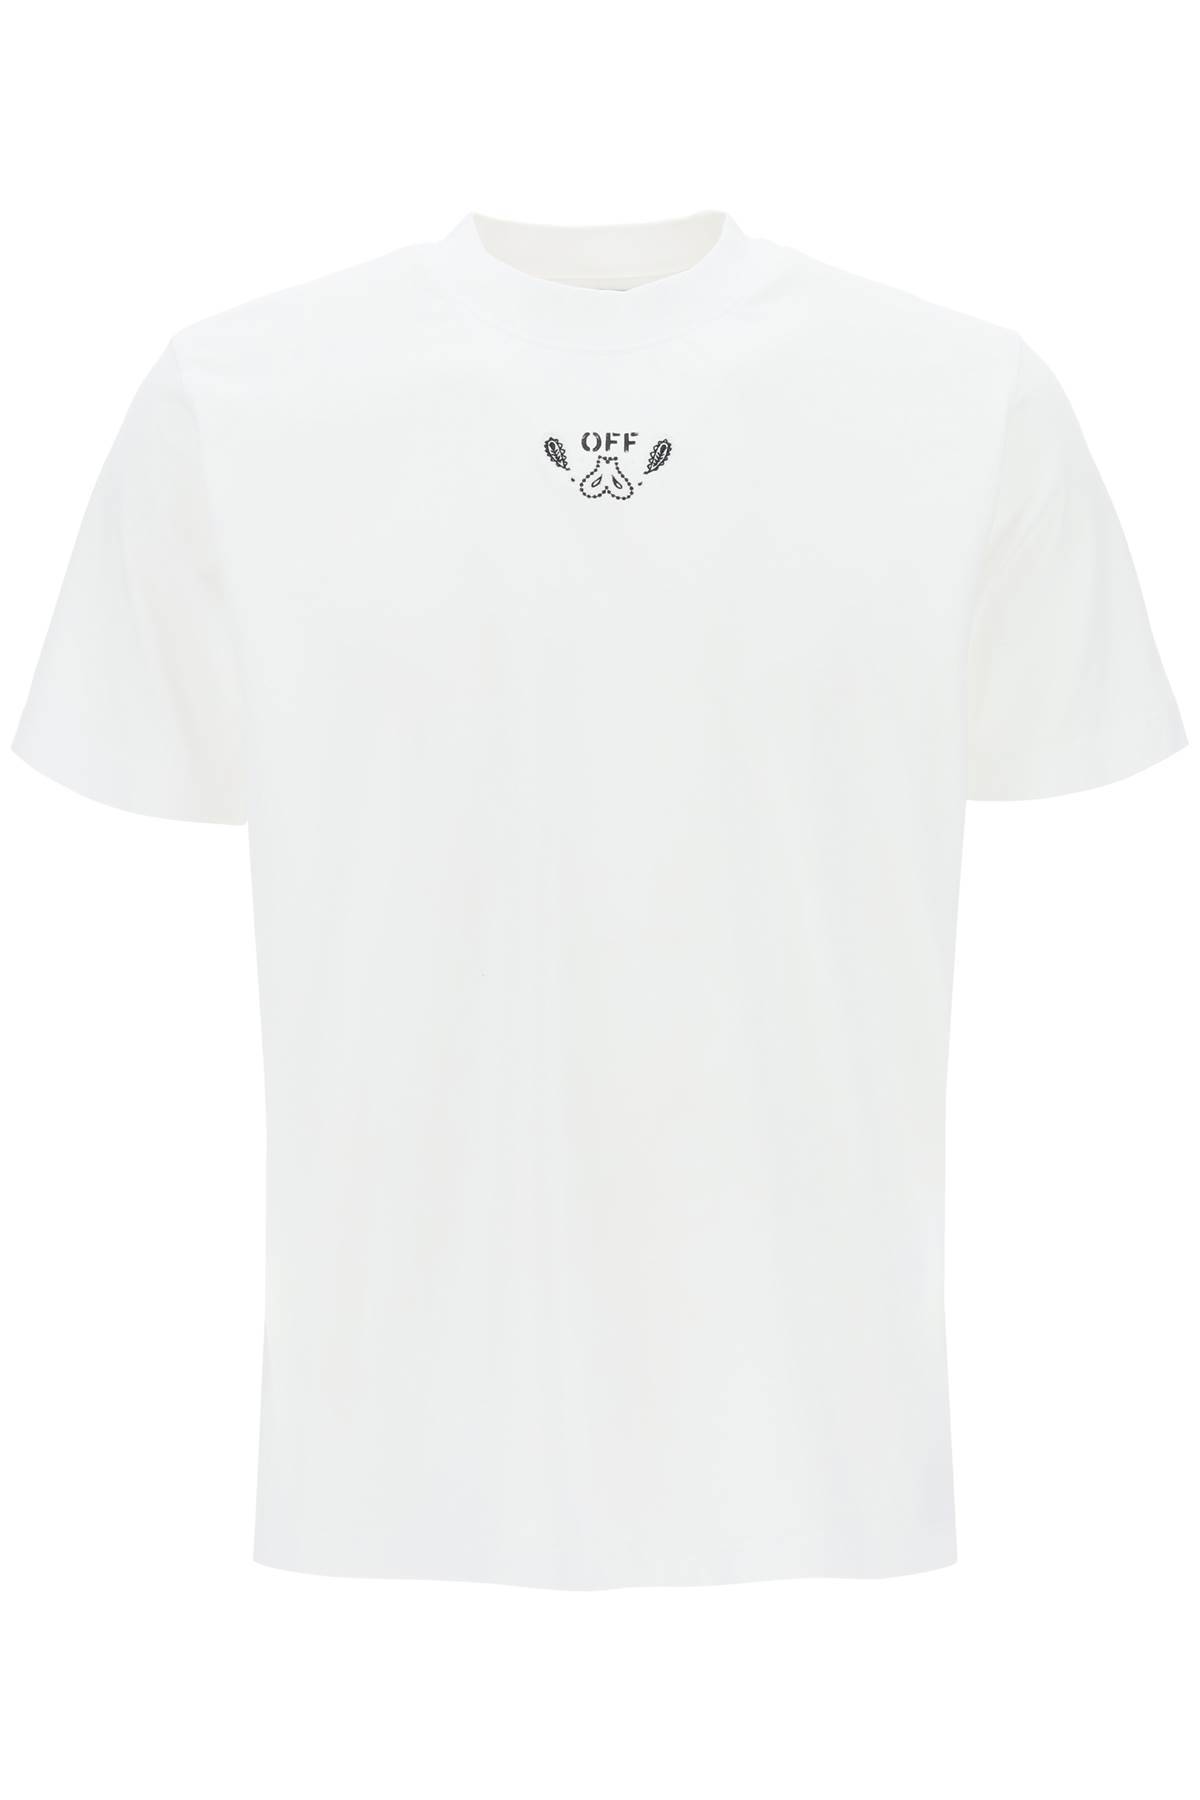 OFF-WHITE OFF-WHITE "bandana arrow pattern t-shirt